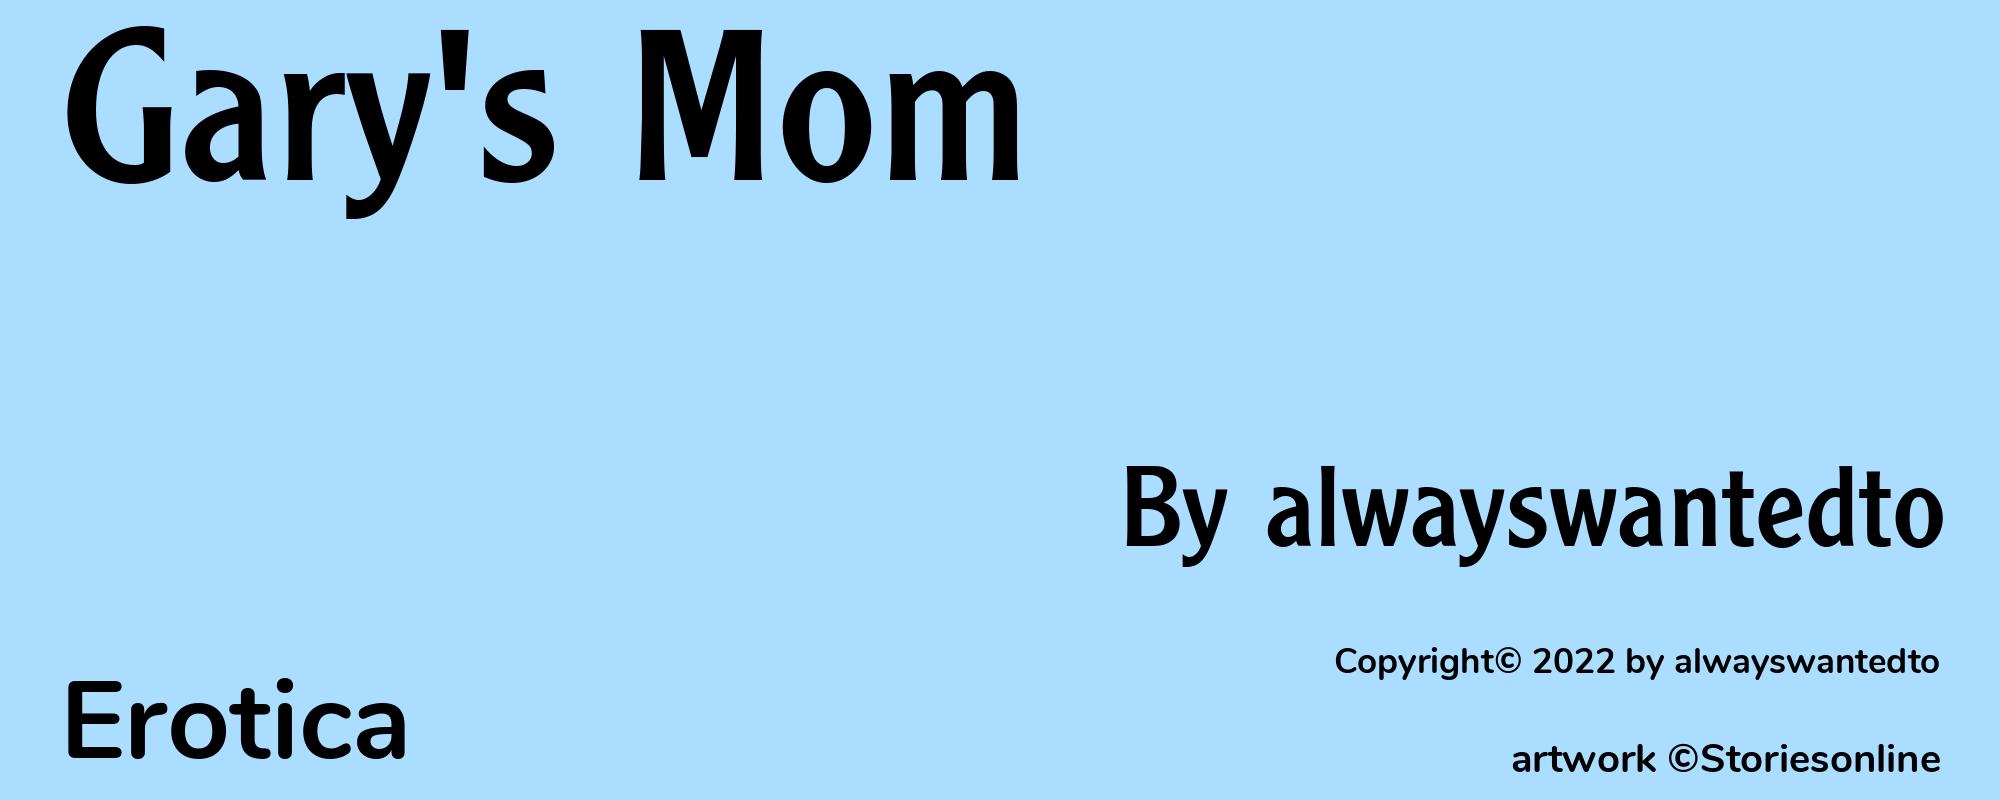 Gary's Mom - Cover